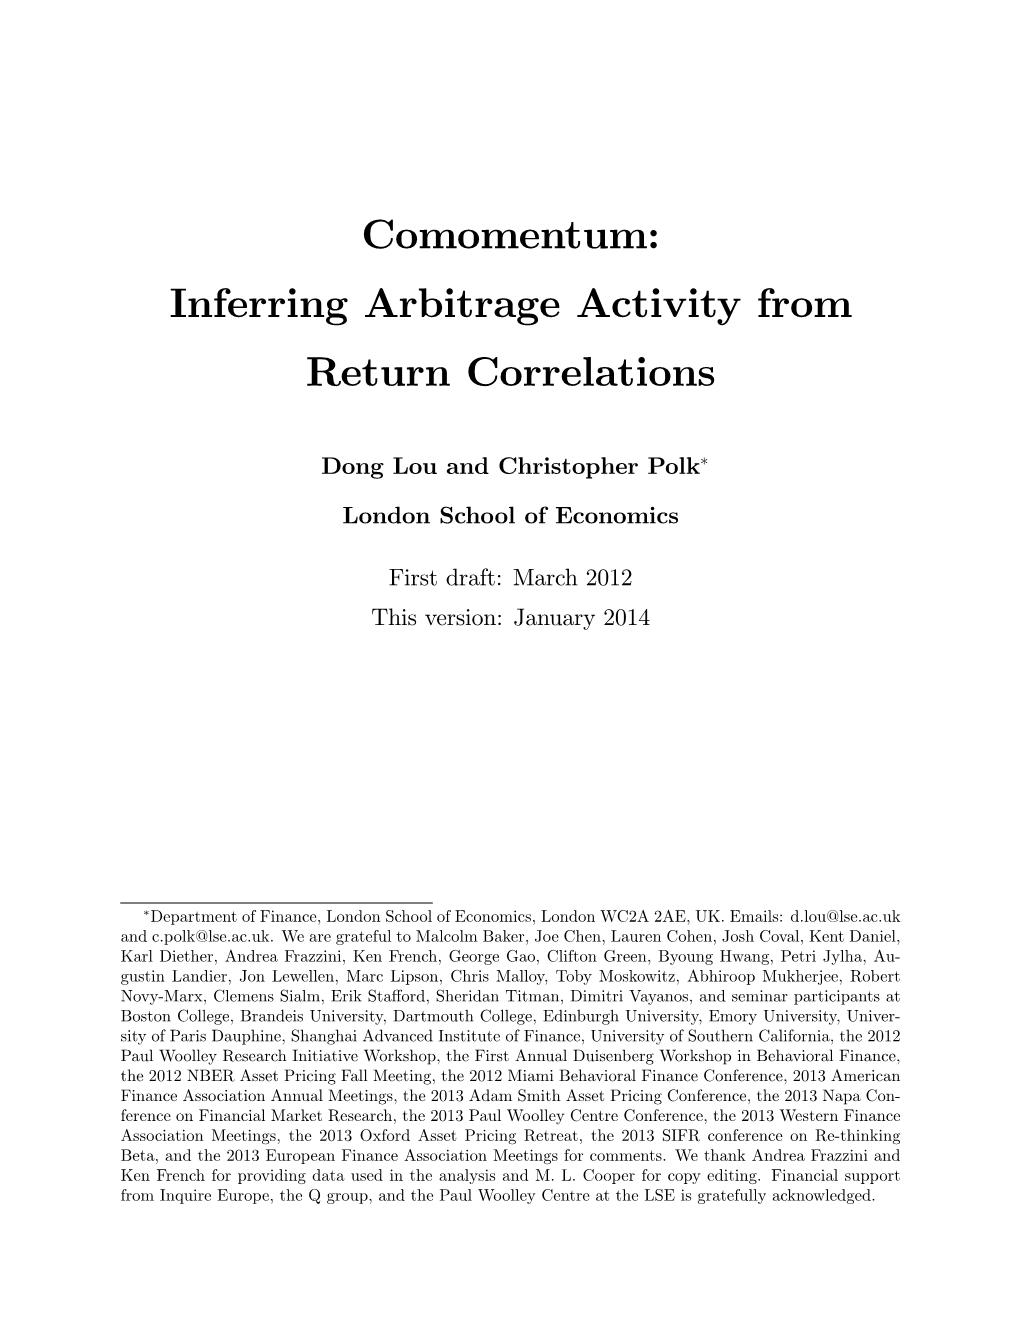 Comomentum-Inferring Arbitrage Activity from Return Correlations.Pdf